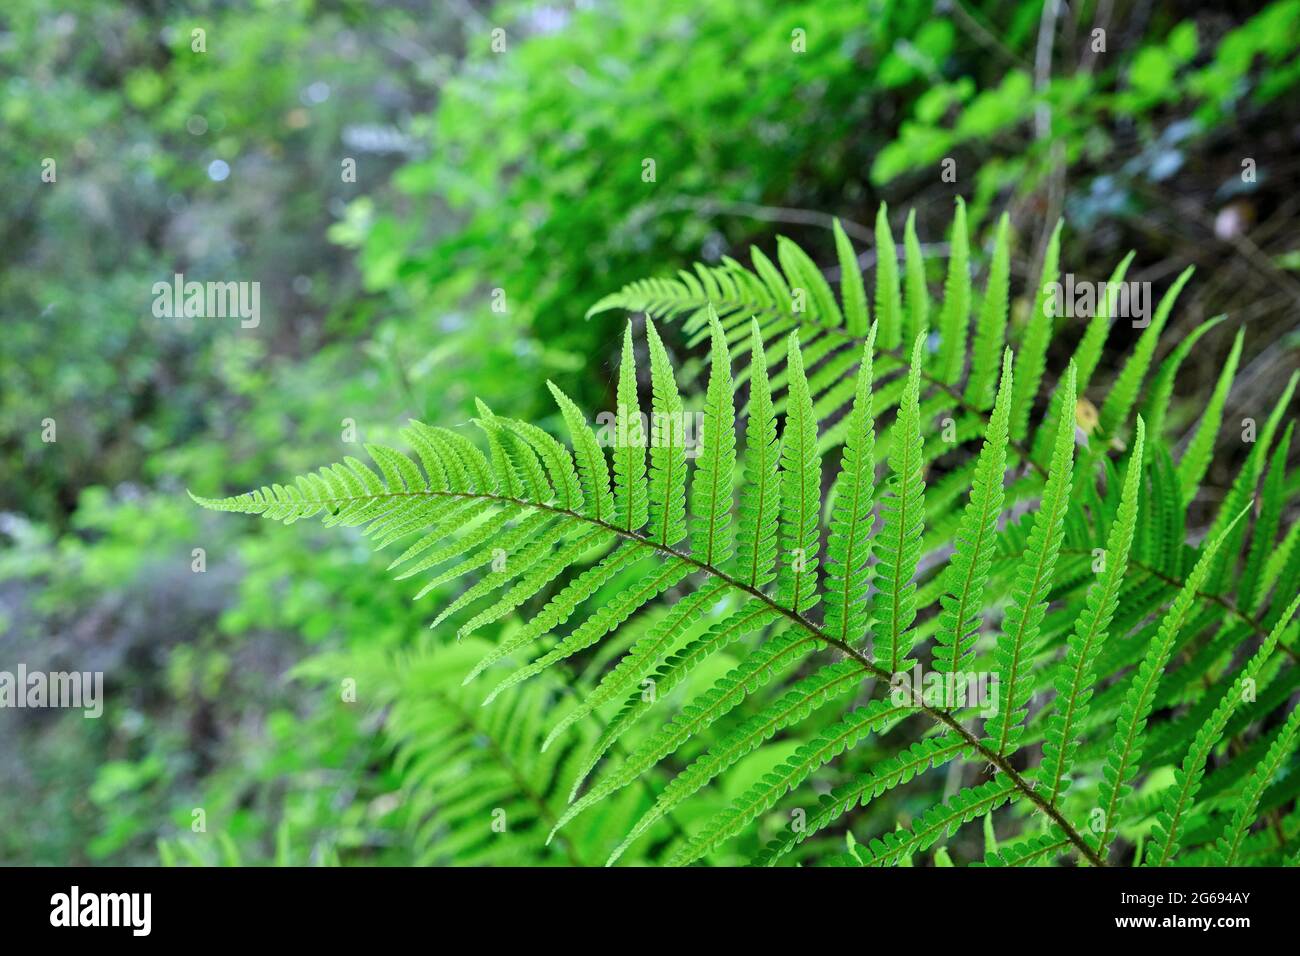 Male fern, Dryopteris filix-mas with sori on leaf underside Stock Photo